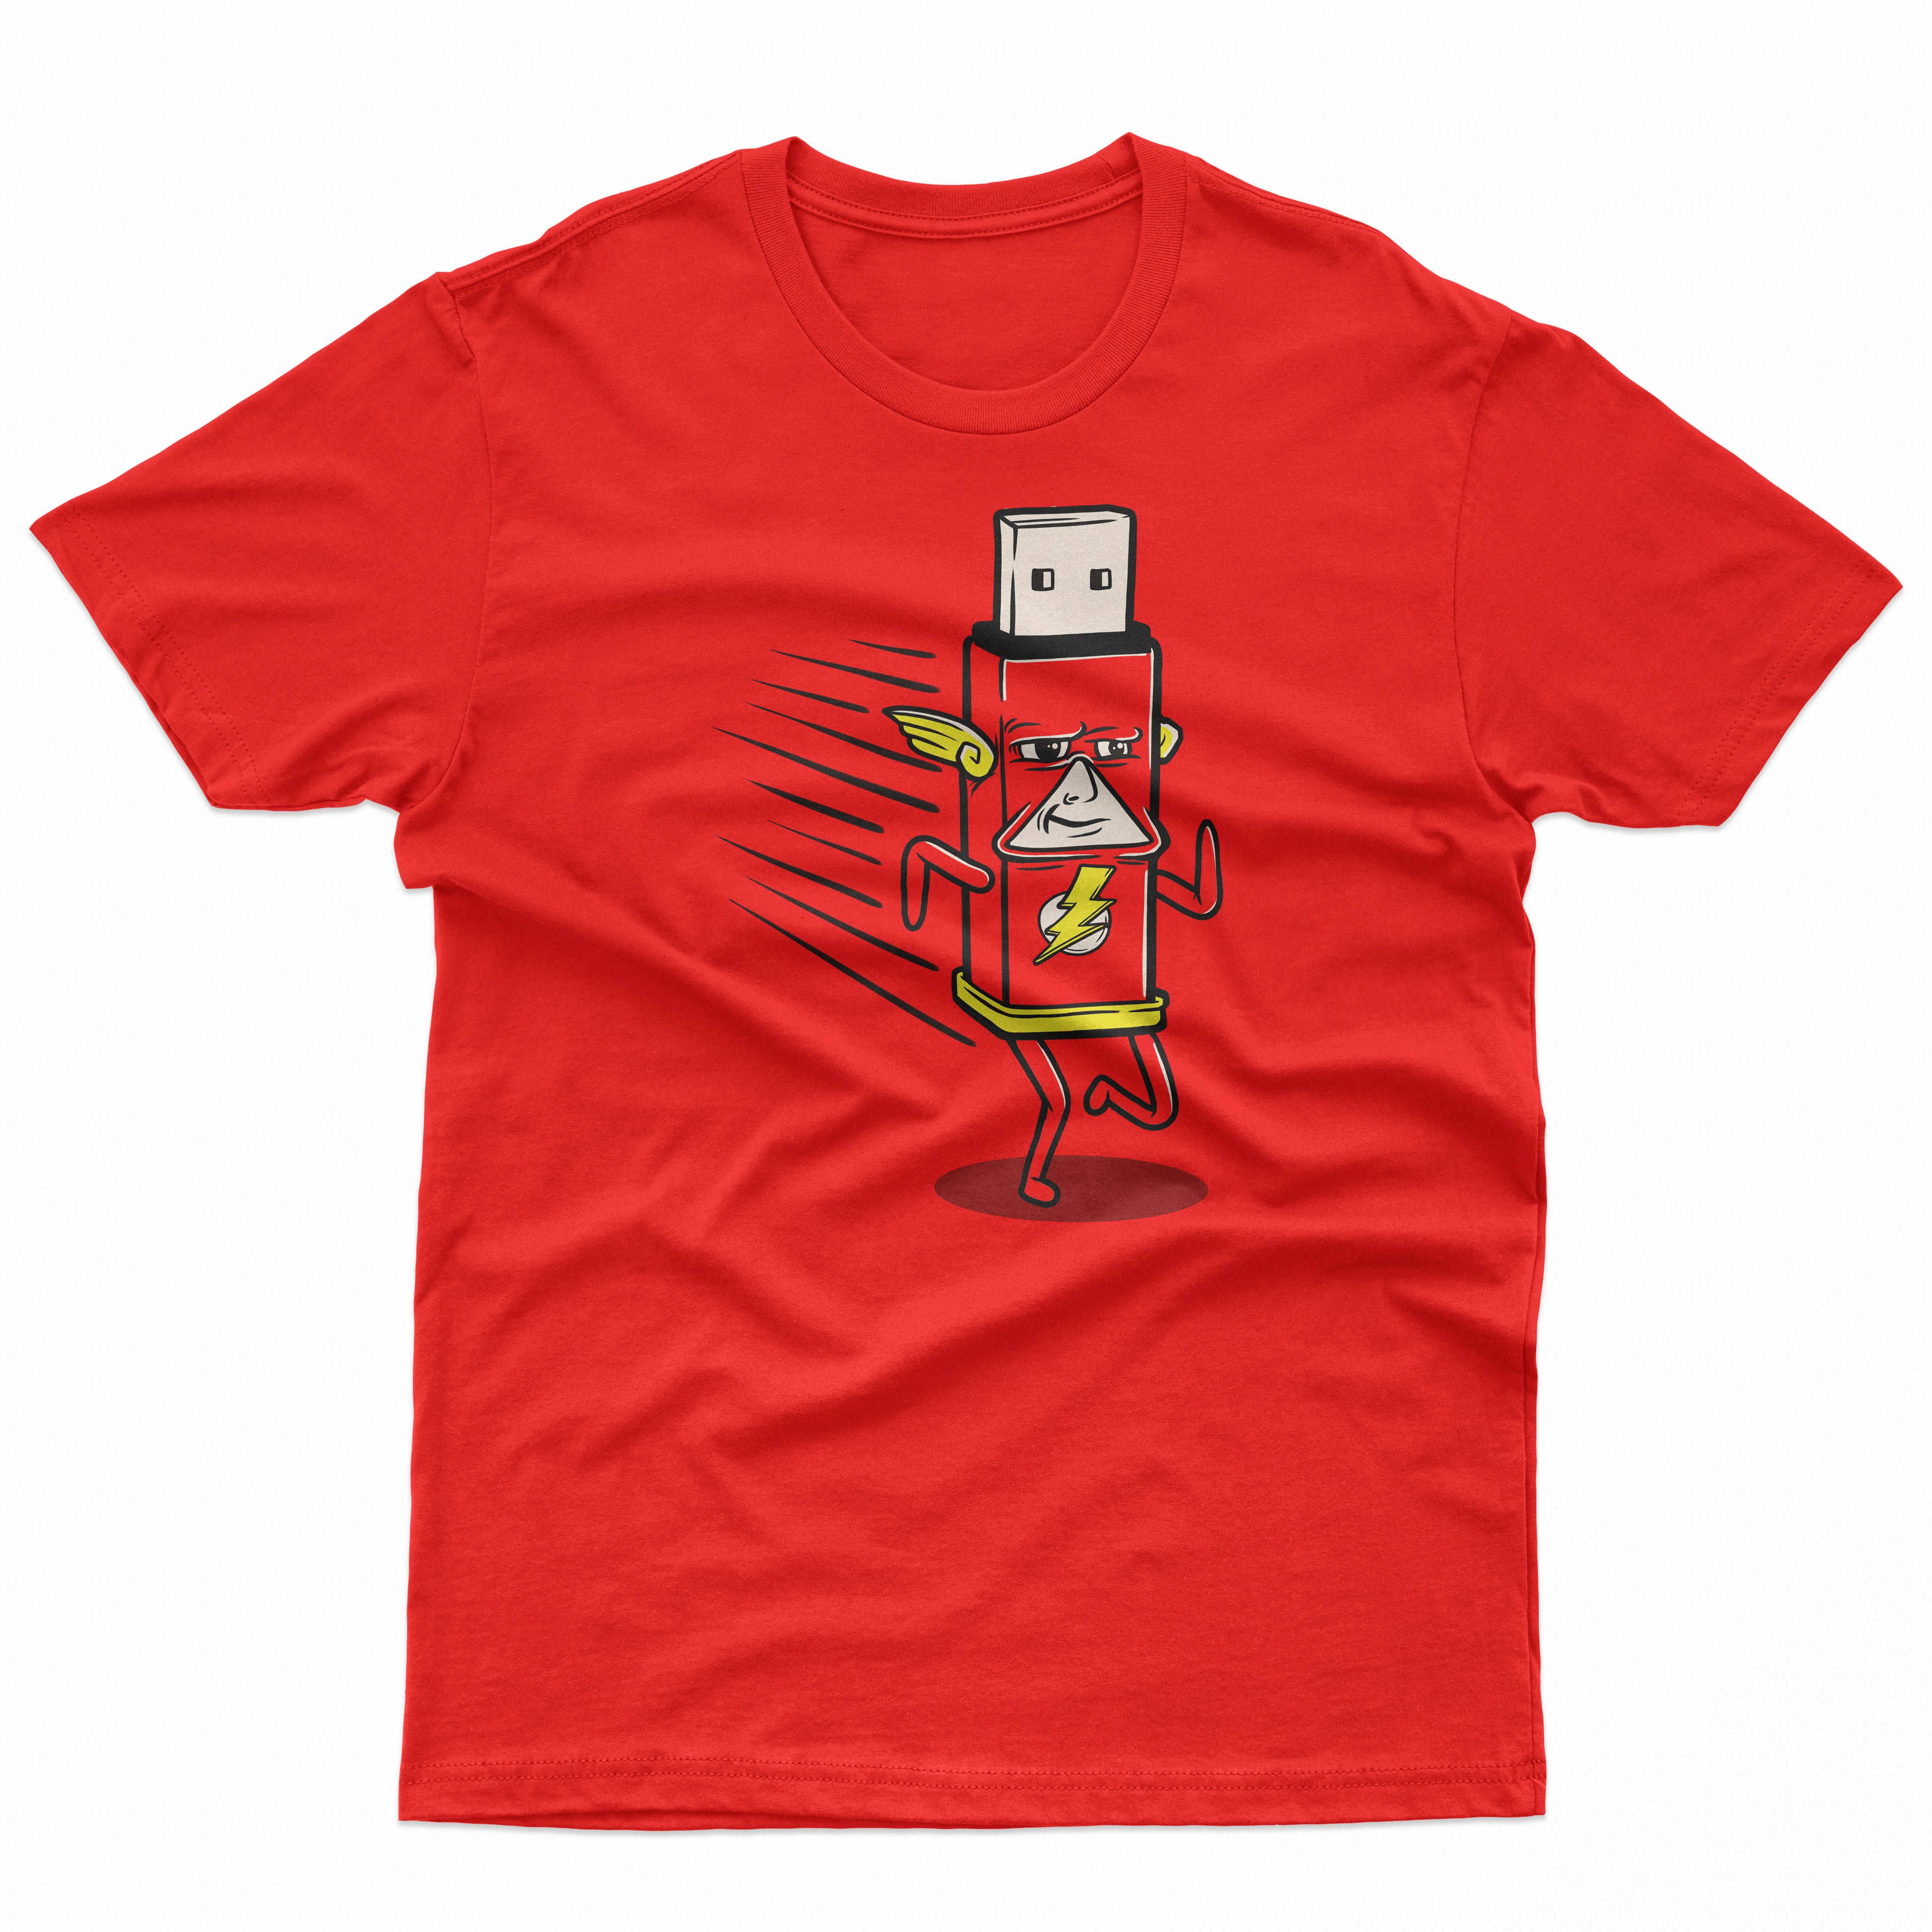 Flash Drive Kids T Shirt